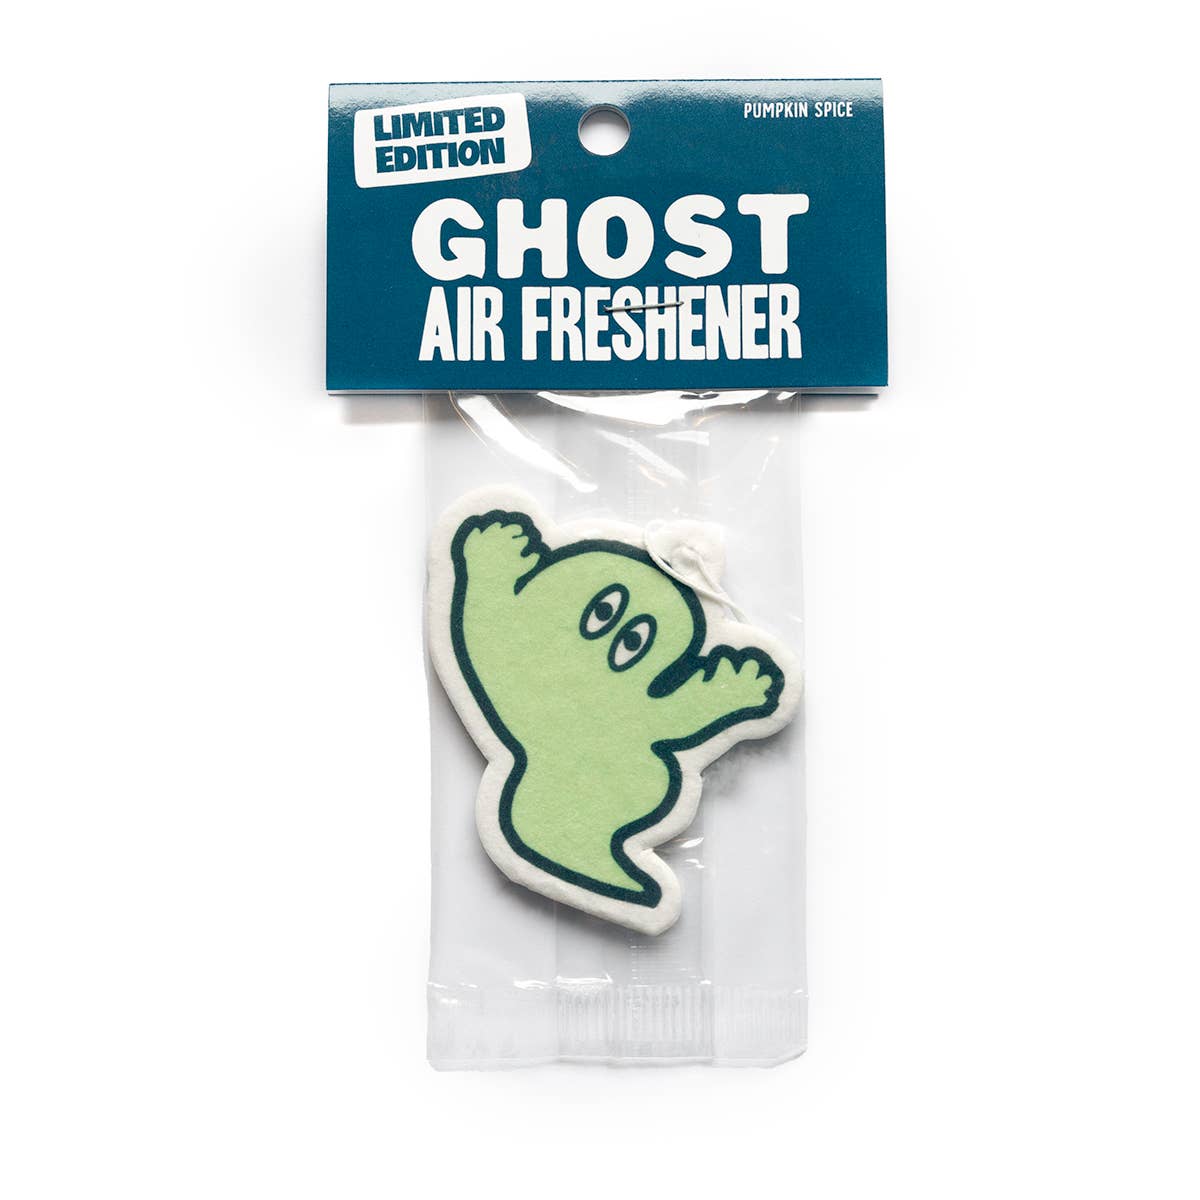 Ghost Air Freshener